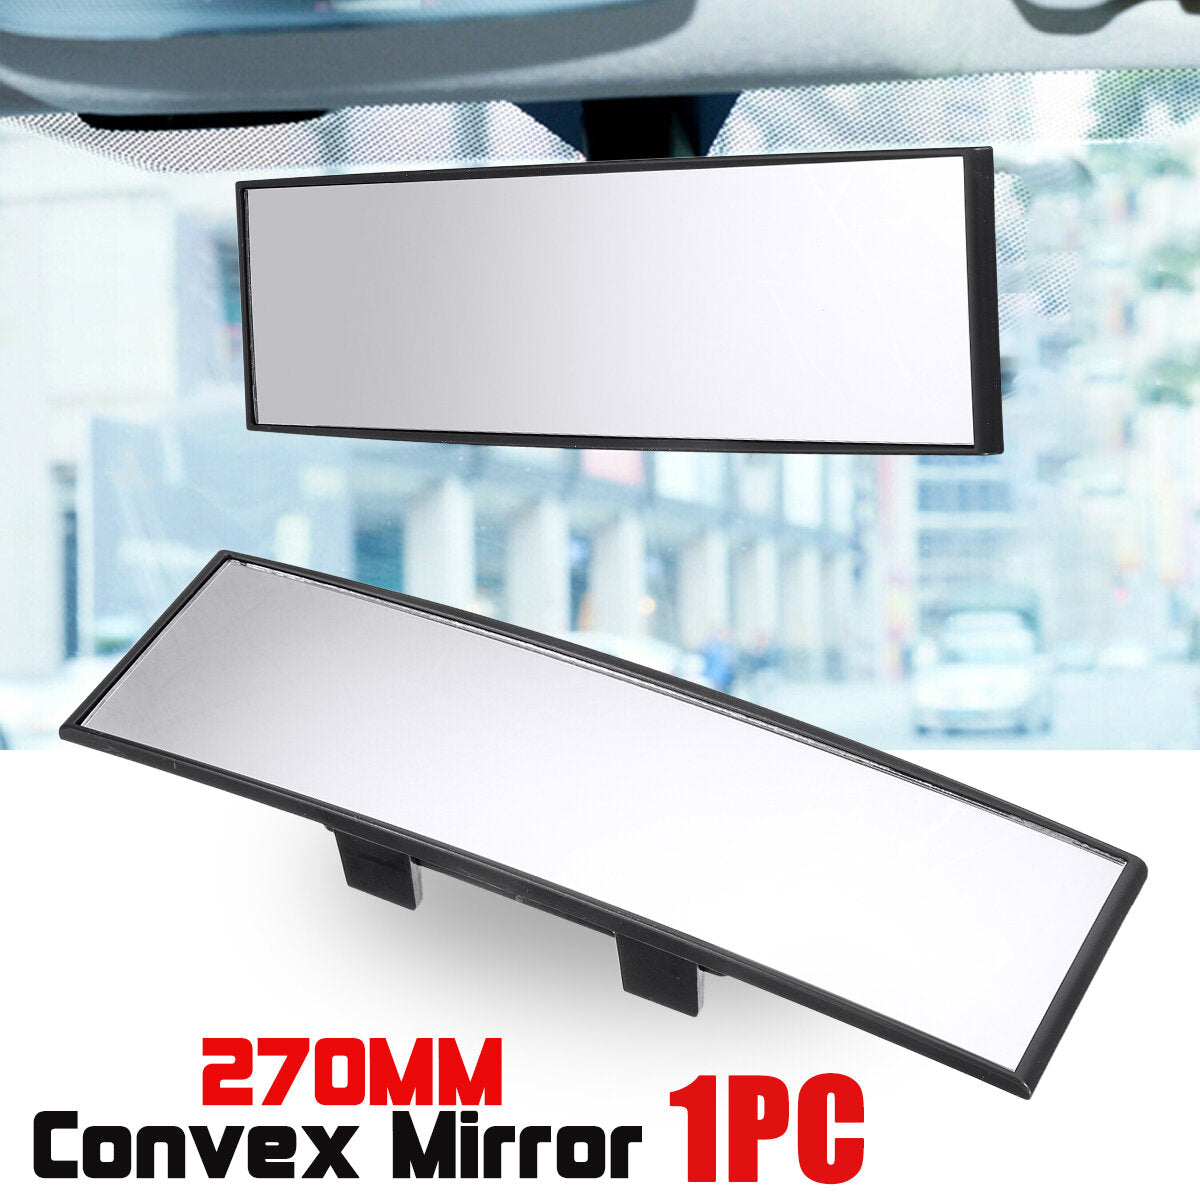 Car Interior Panoramic Convex 270mm Rear View Mirror